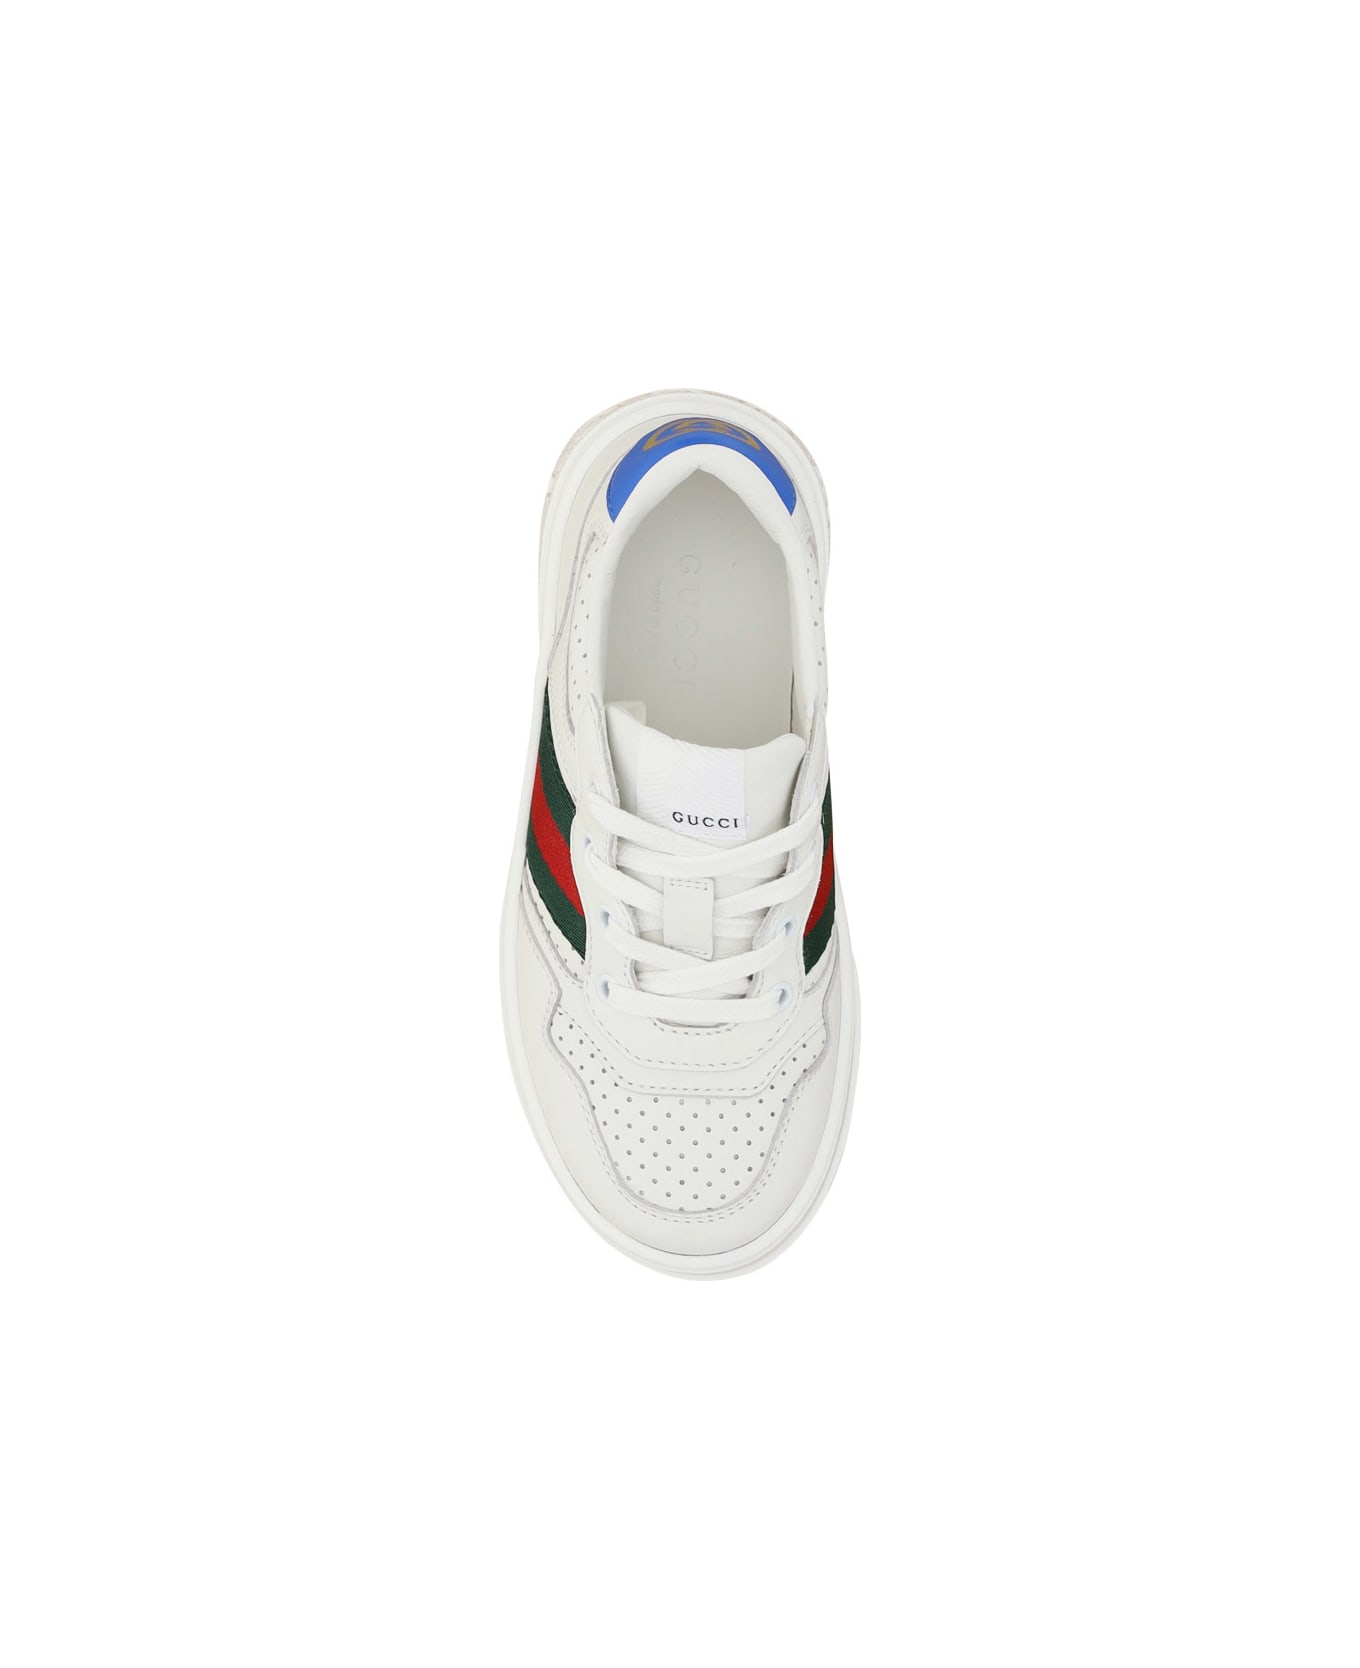 Gucci Sneakers - WHITE